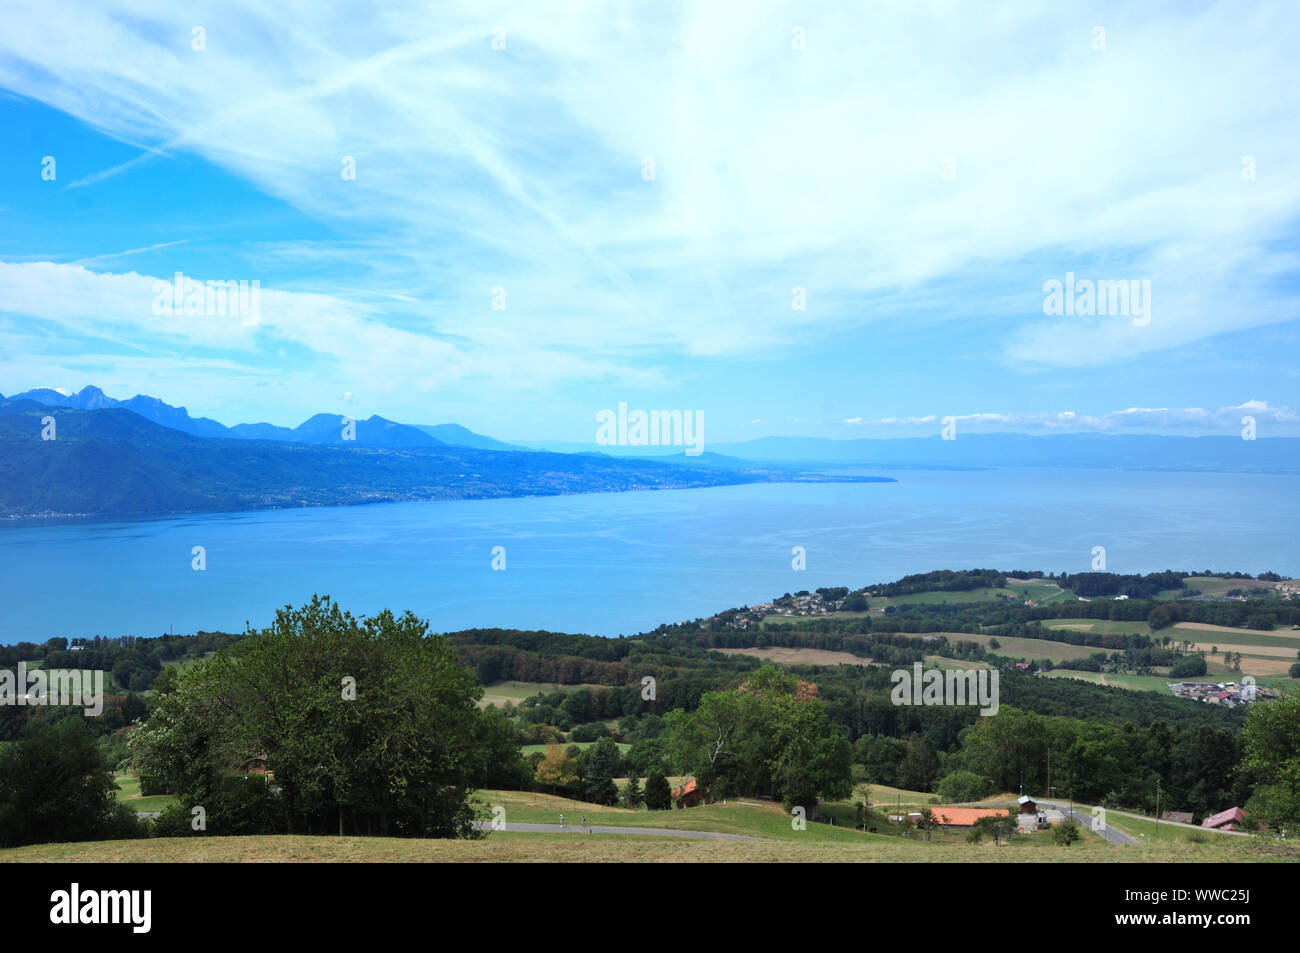 Scenic view of the Lemanic region called La Riviera in Switzerland Stock Photo